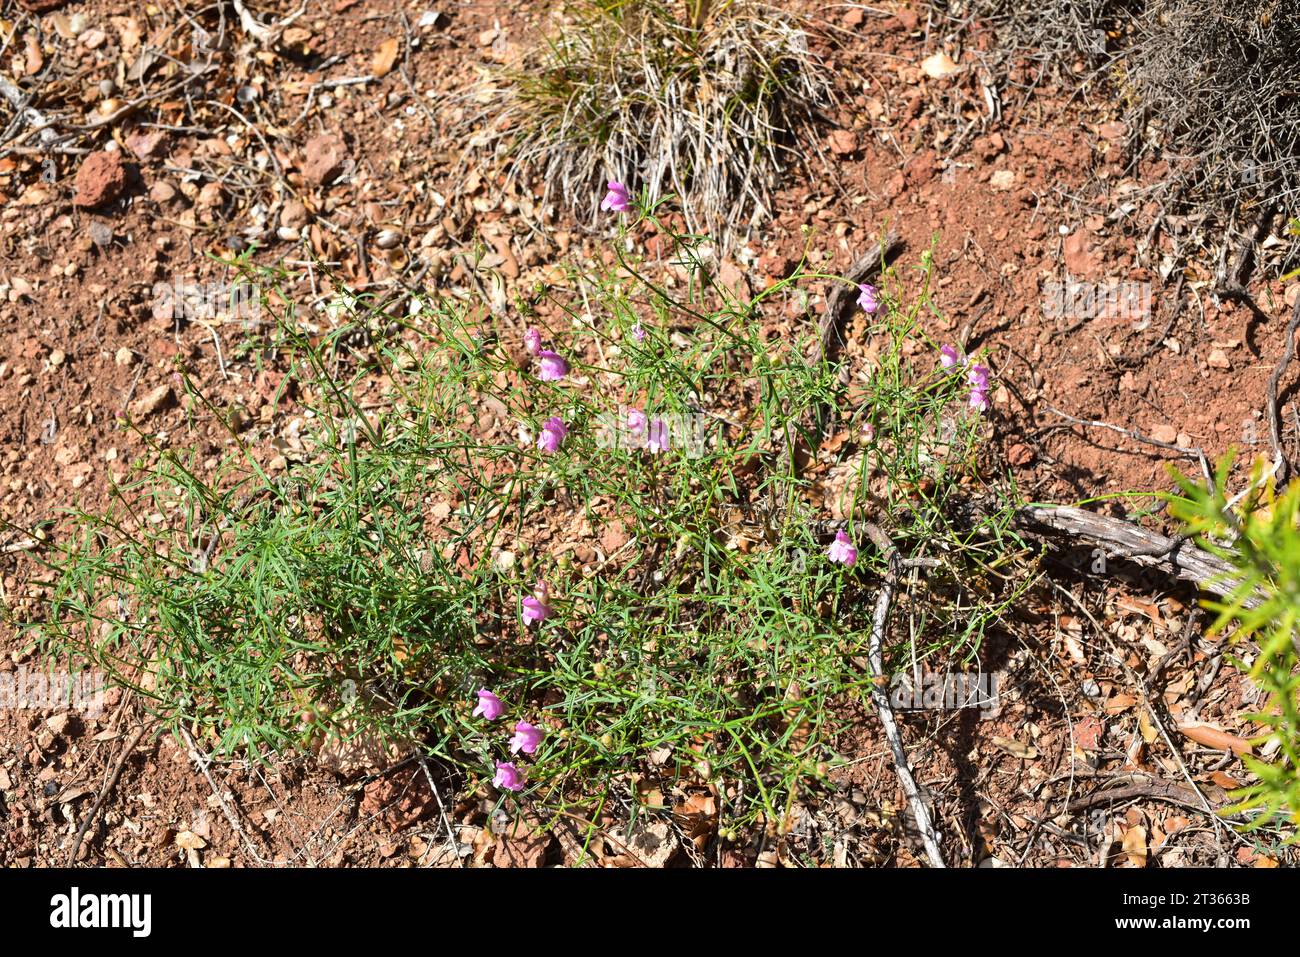 Conejitos (Antirrhinum barrelieri) is a perennial herb native to western Mediterranean region, especially in eastern Spain. This photo was taken in El Stock Photo